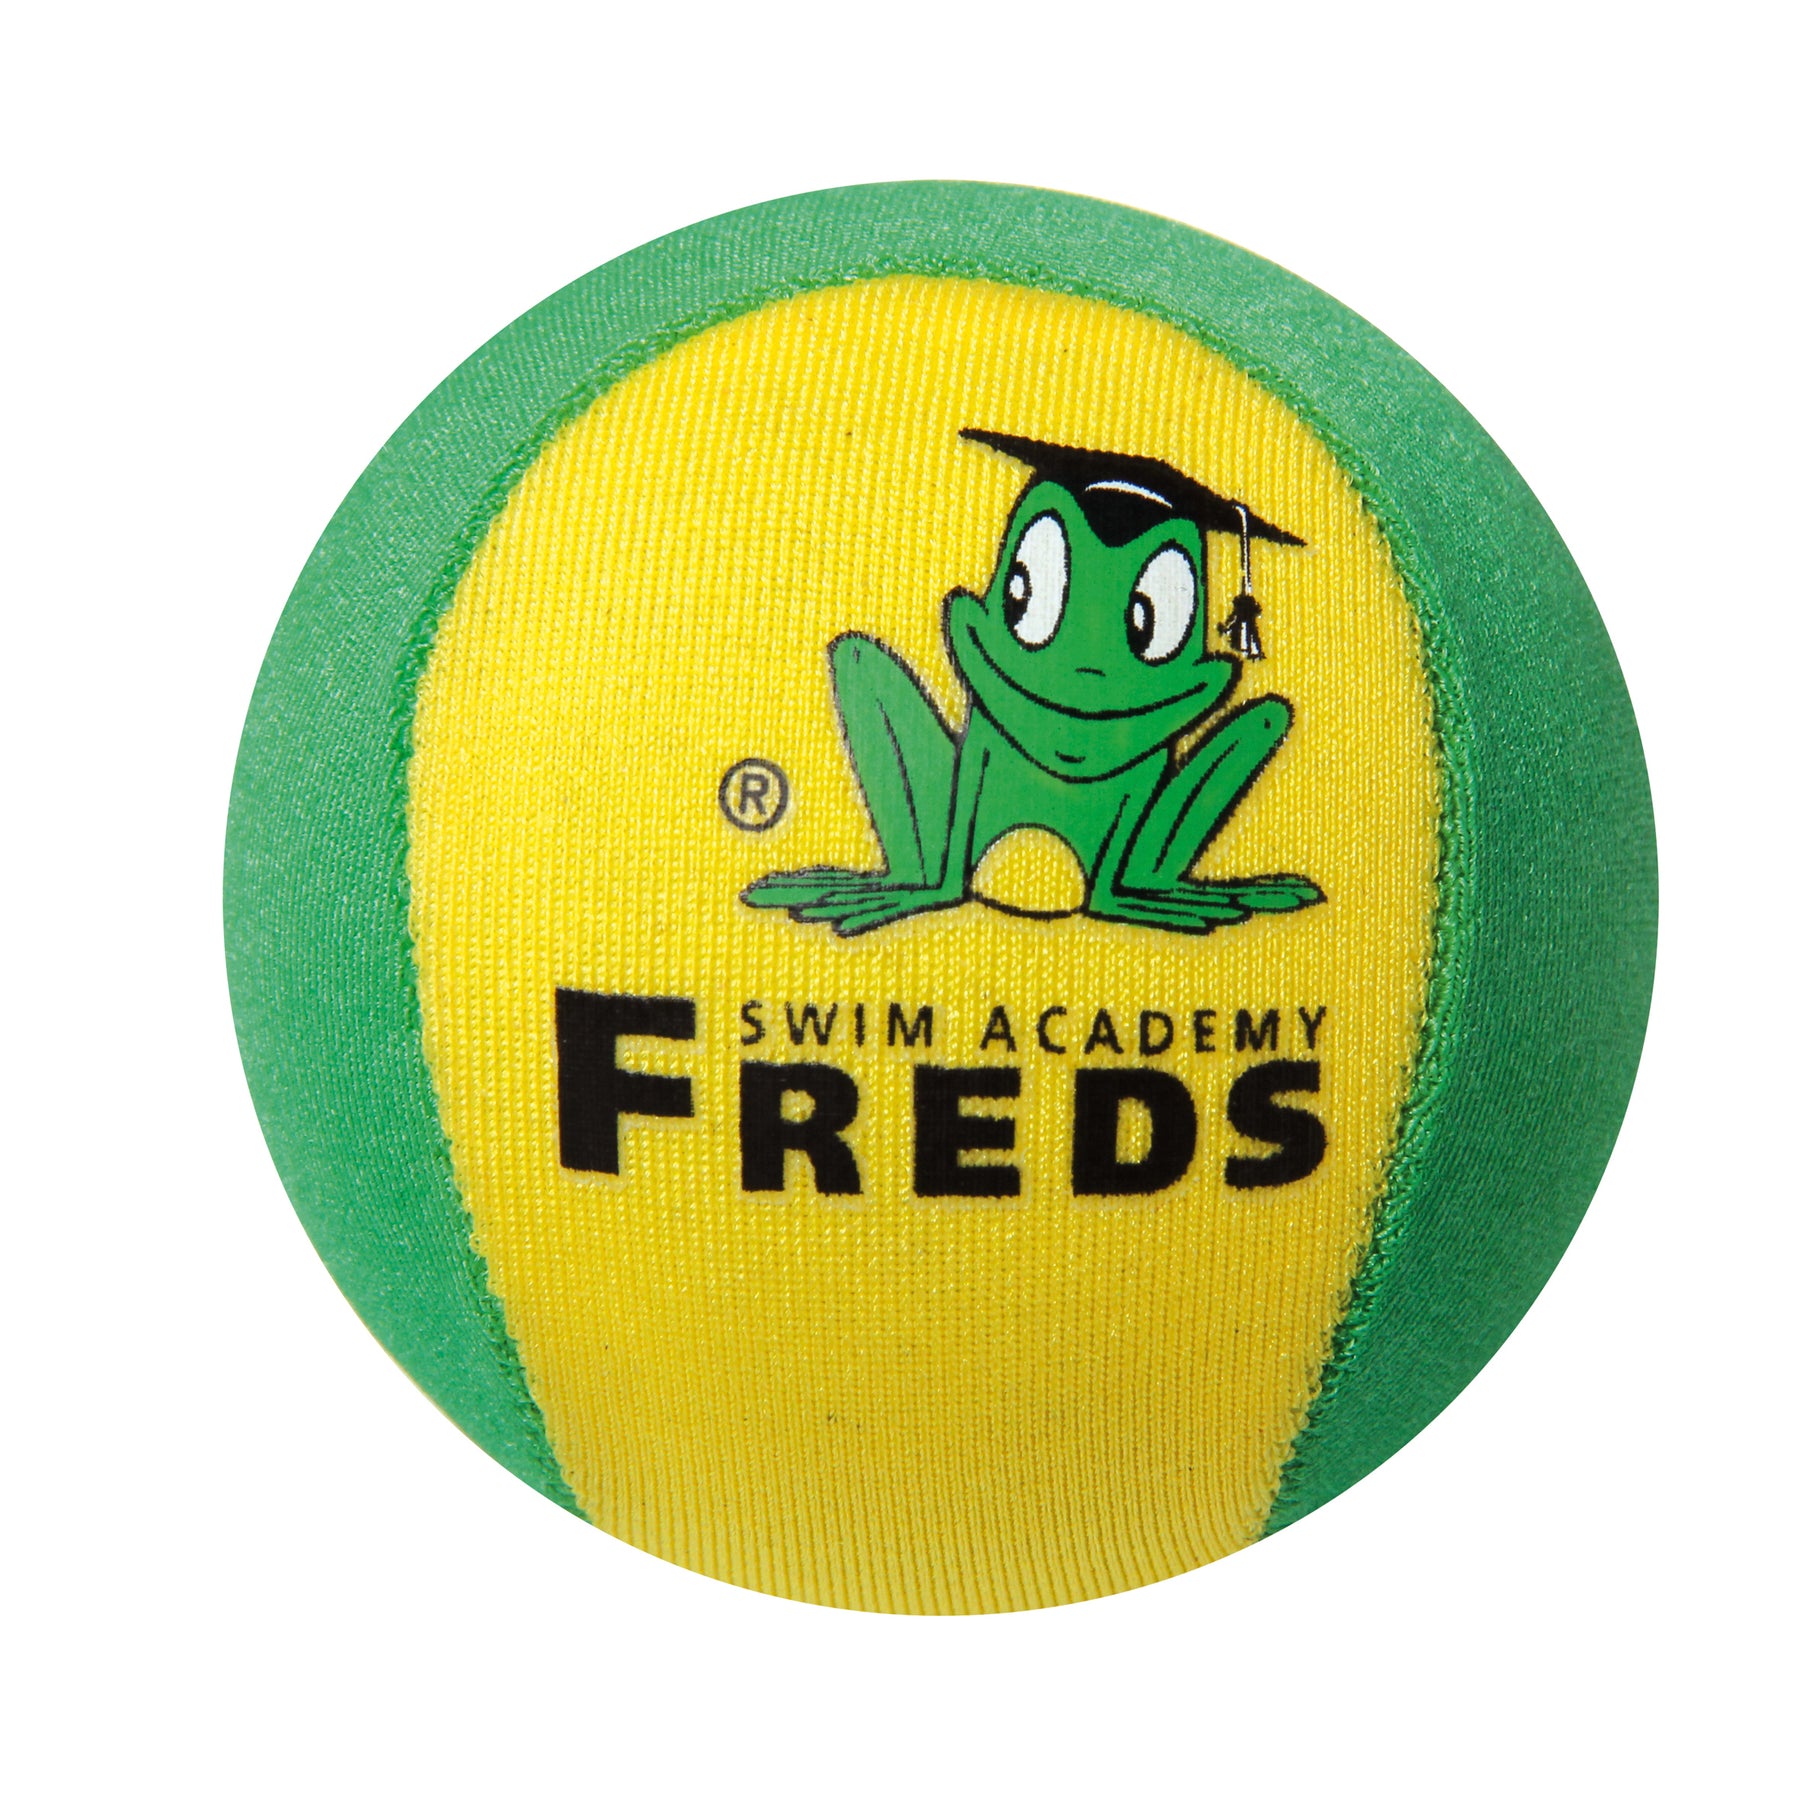 Freds Swim Academy - Funball 5cm